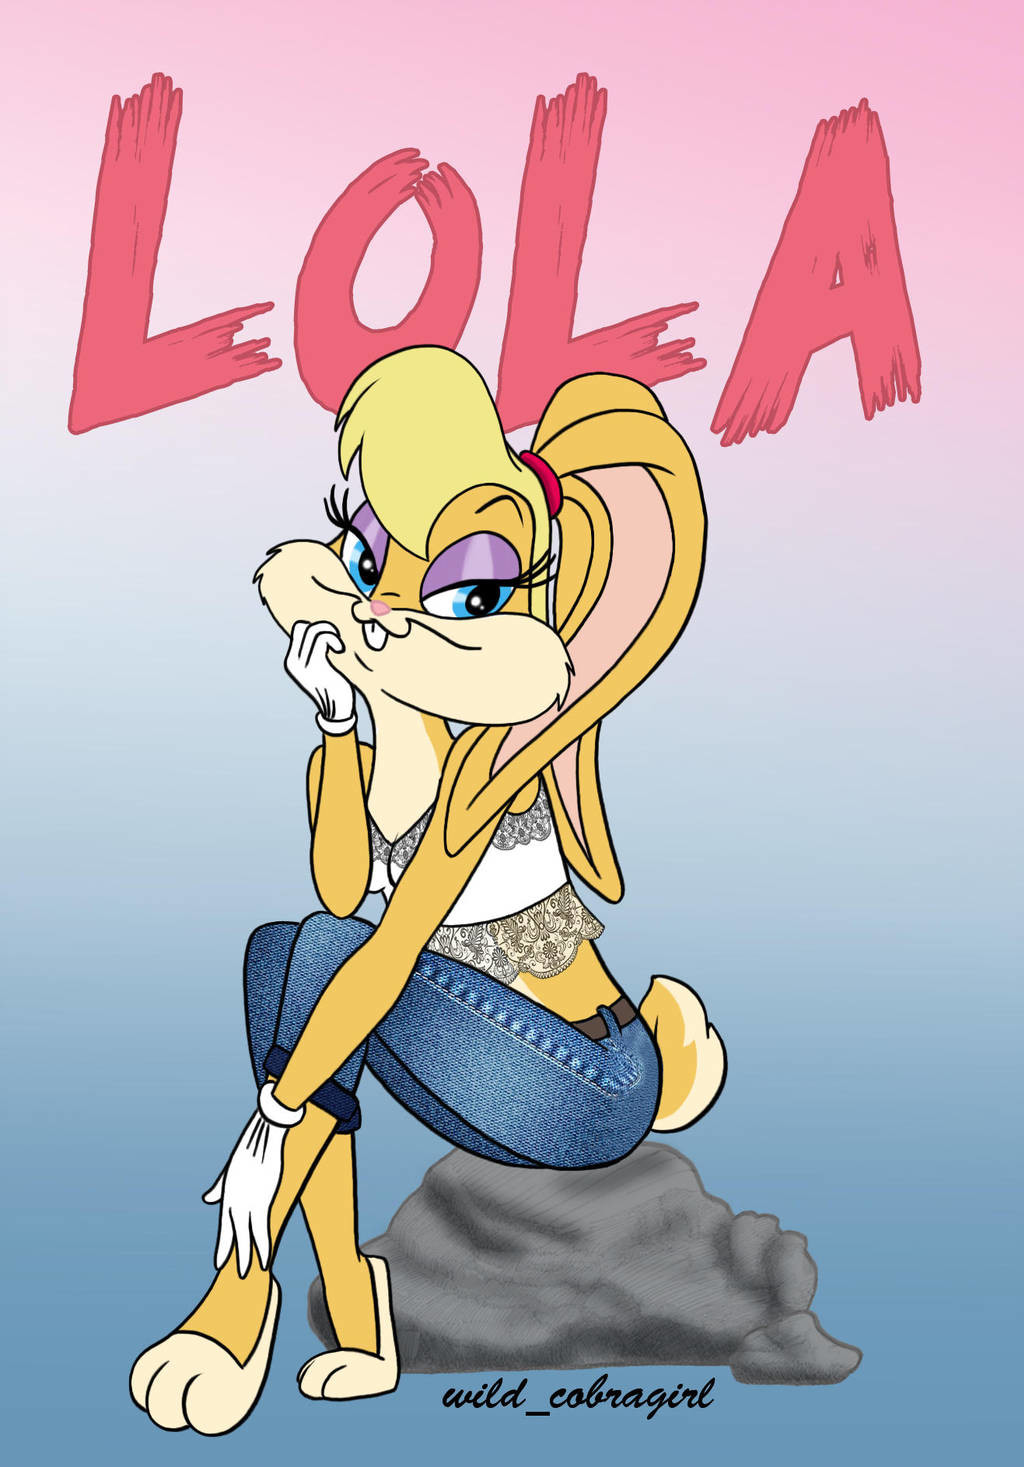 Lola Bunny - Lola Bunny by YetiG on Newgrounds - Lola bunny is a looney